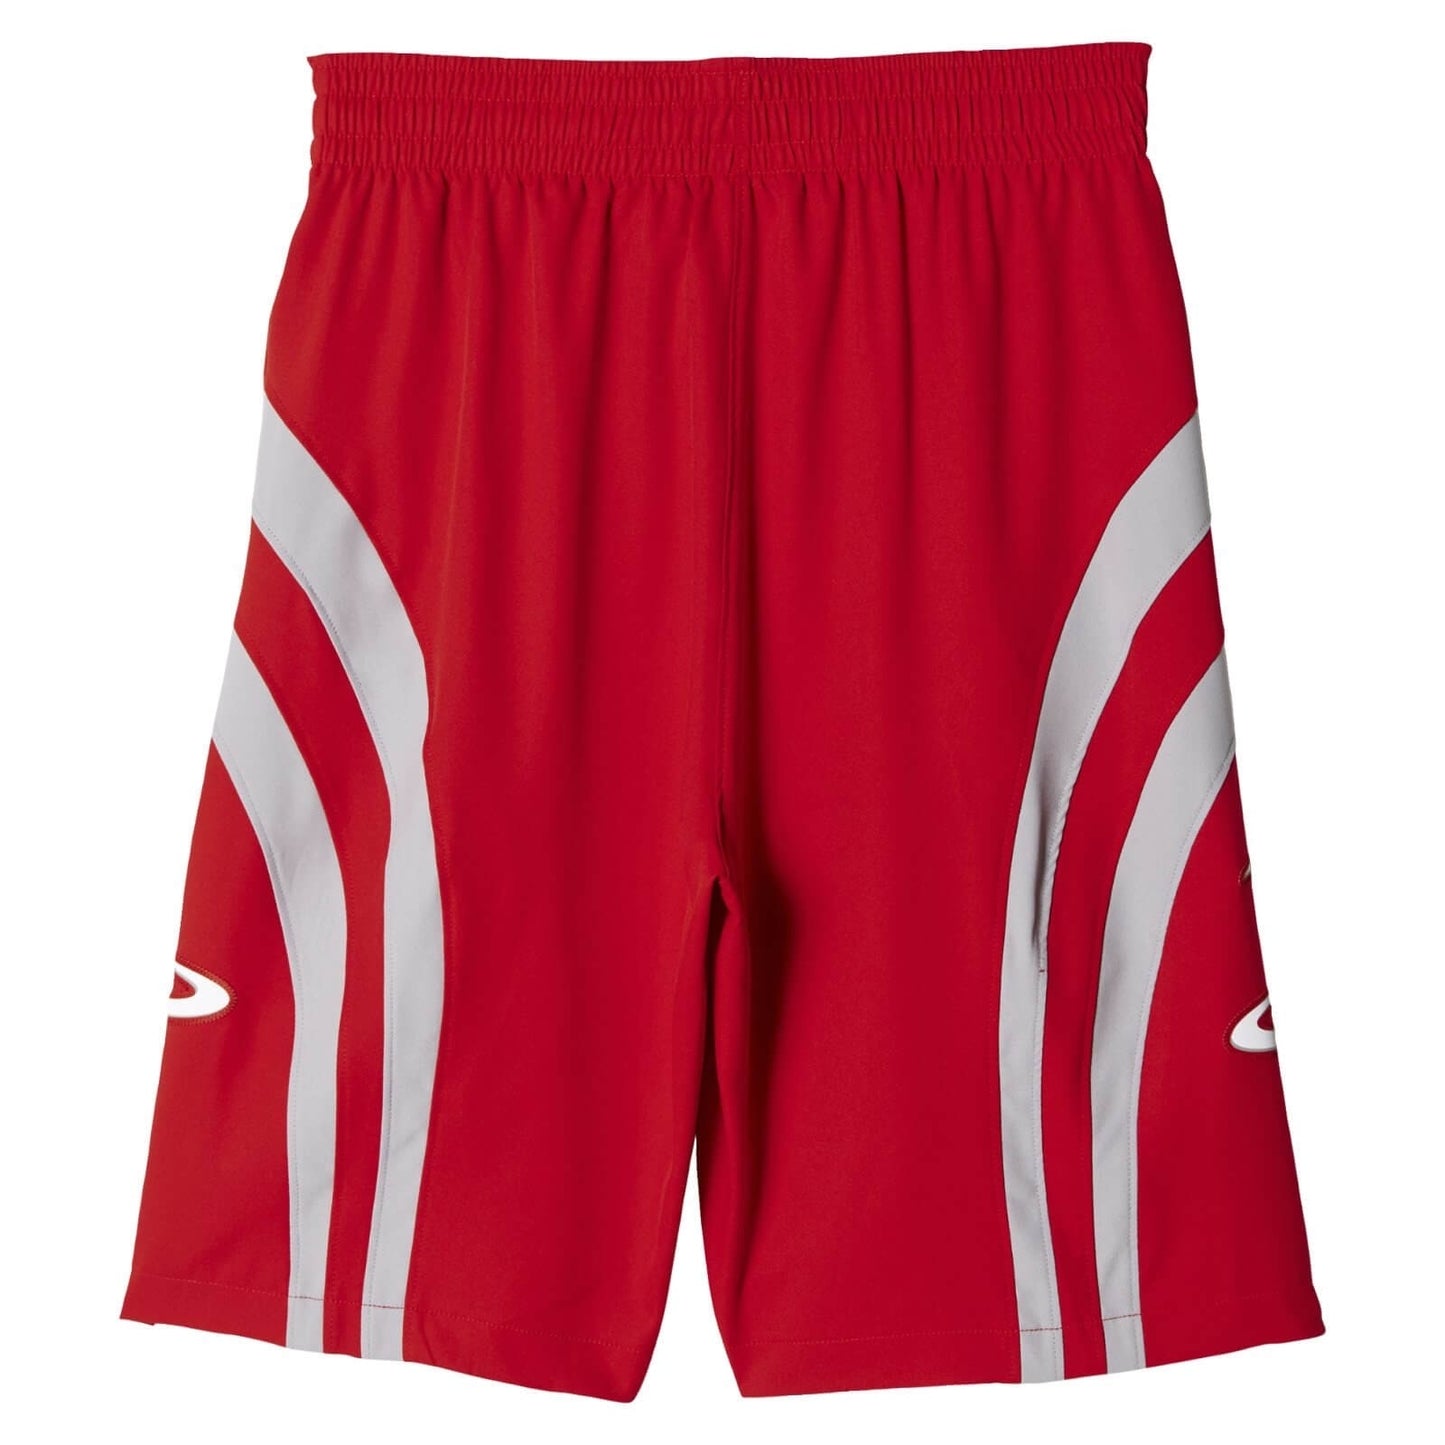 Adidas Houston Rockets NBA Swingman Shorts